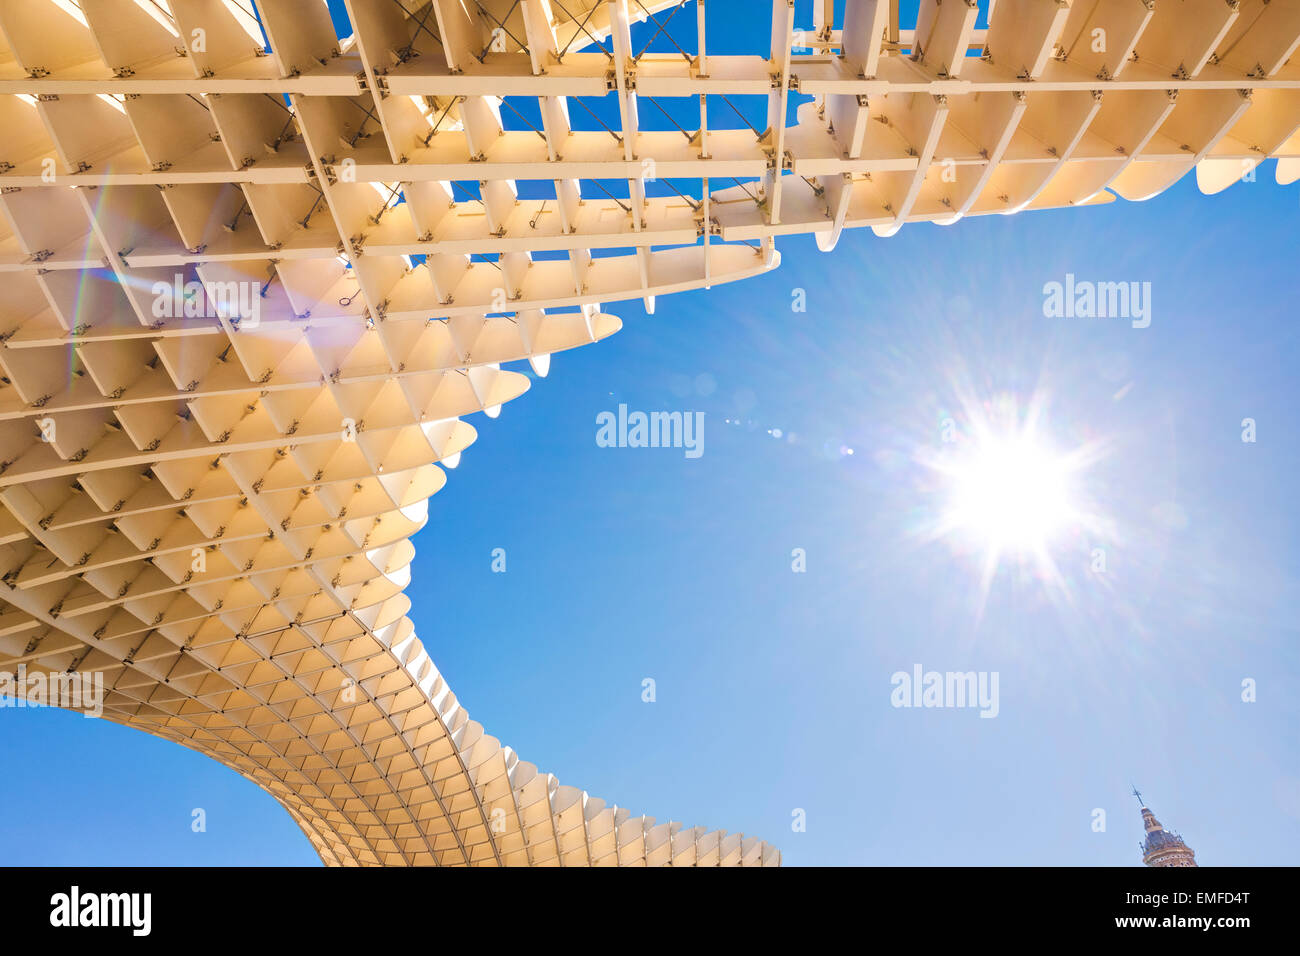 Las setas de la Encarnación, o Sevilla Metropol Parasol madera moderna estructura en Sevilla España Foto de stock